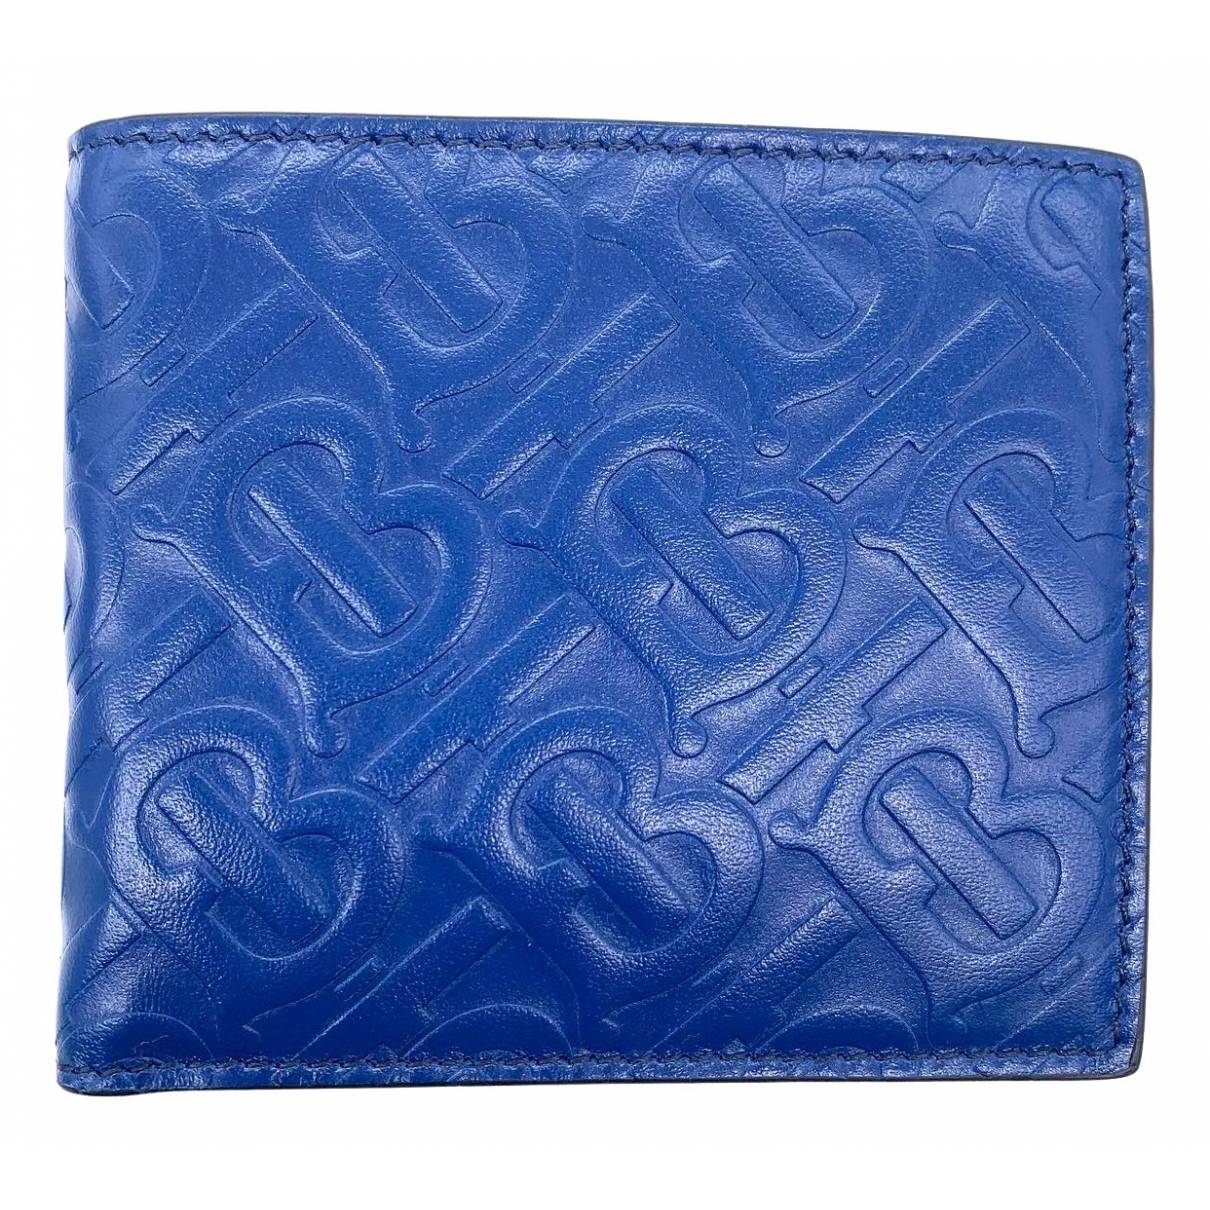 burberry wallet blue